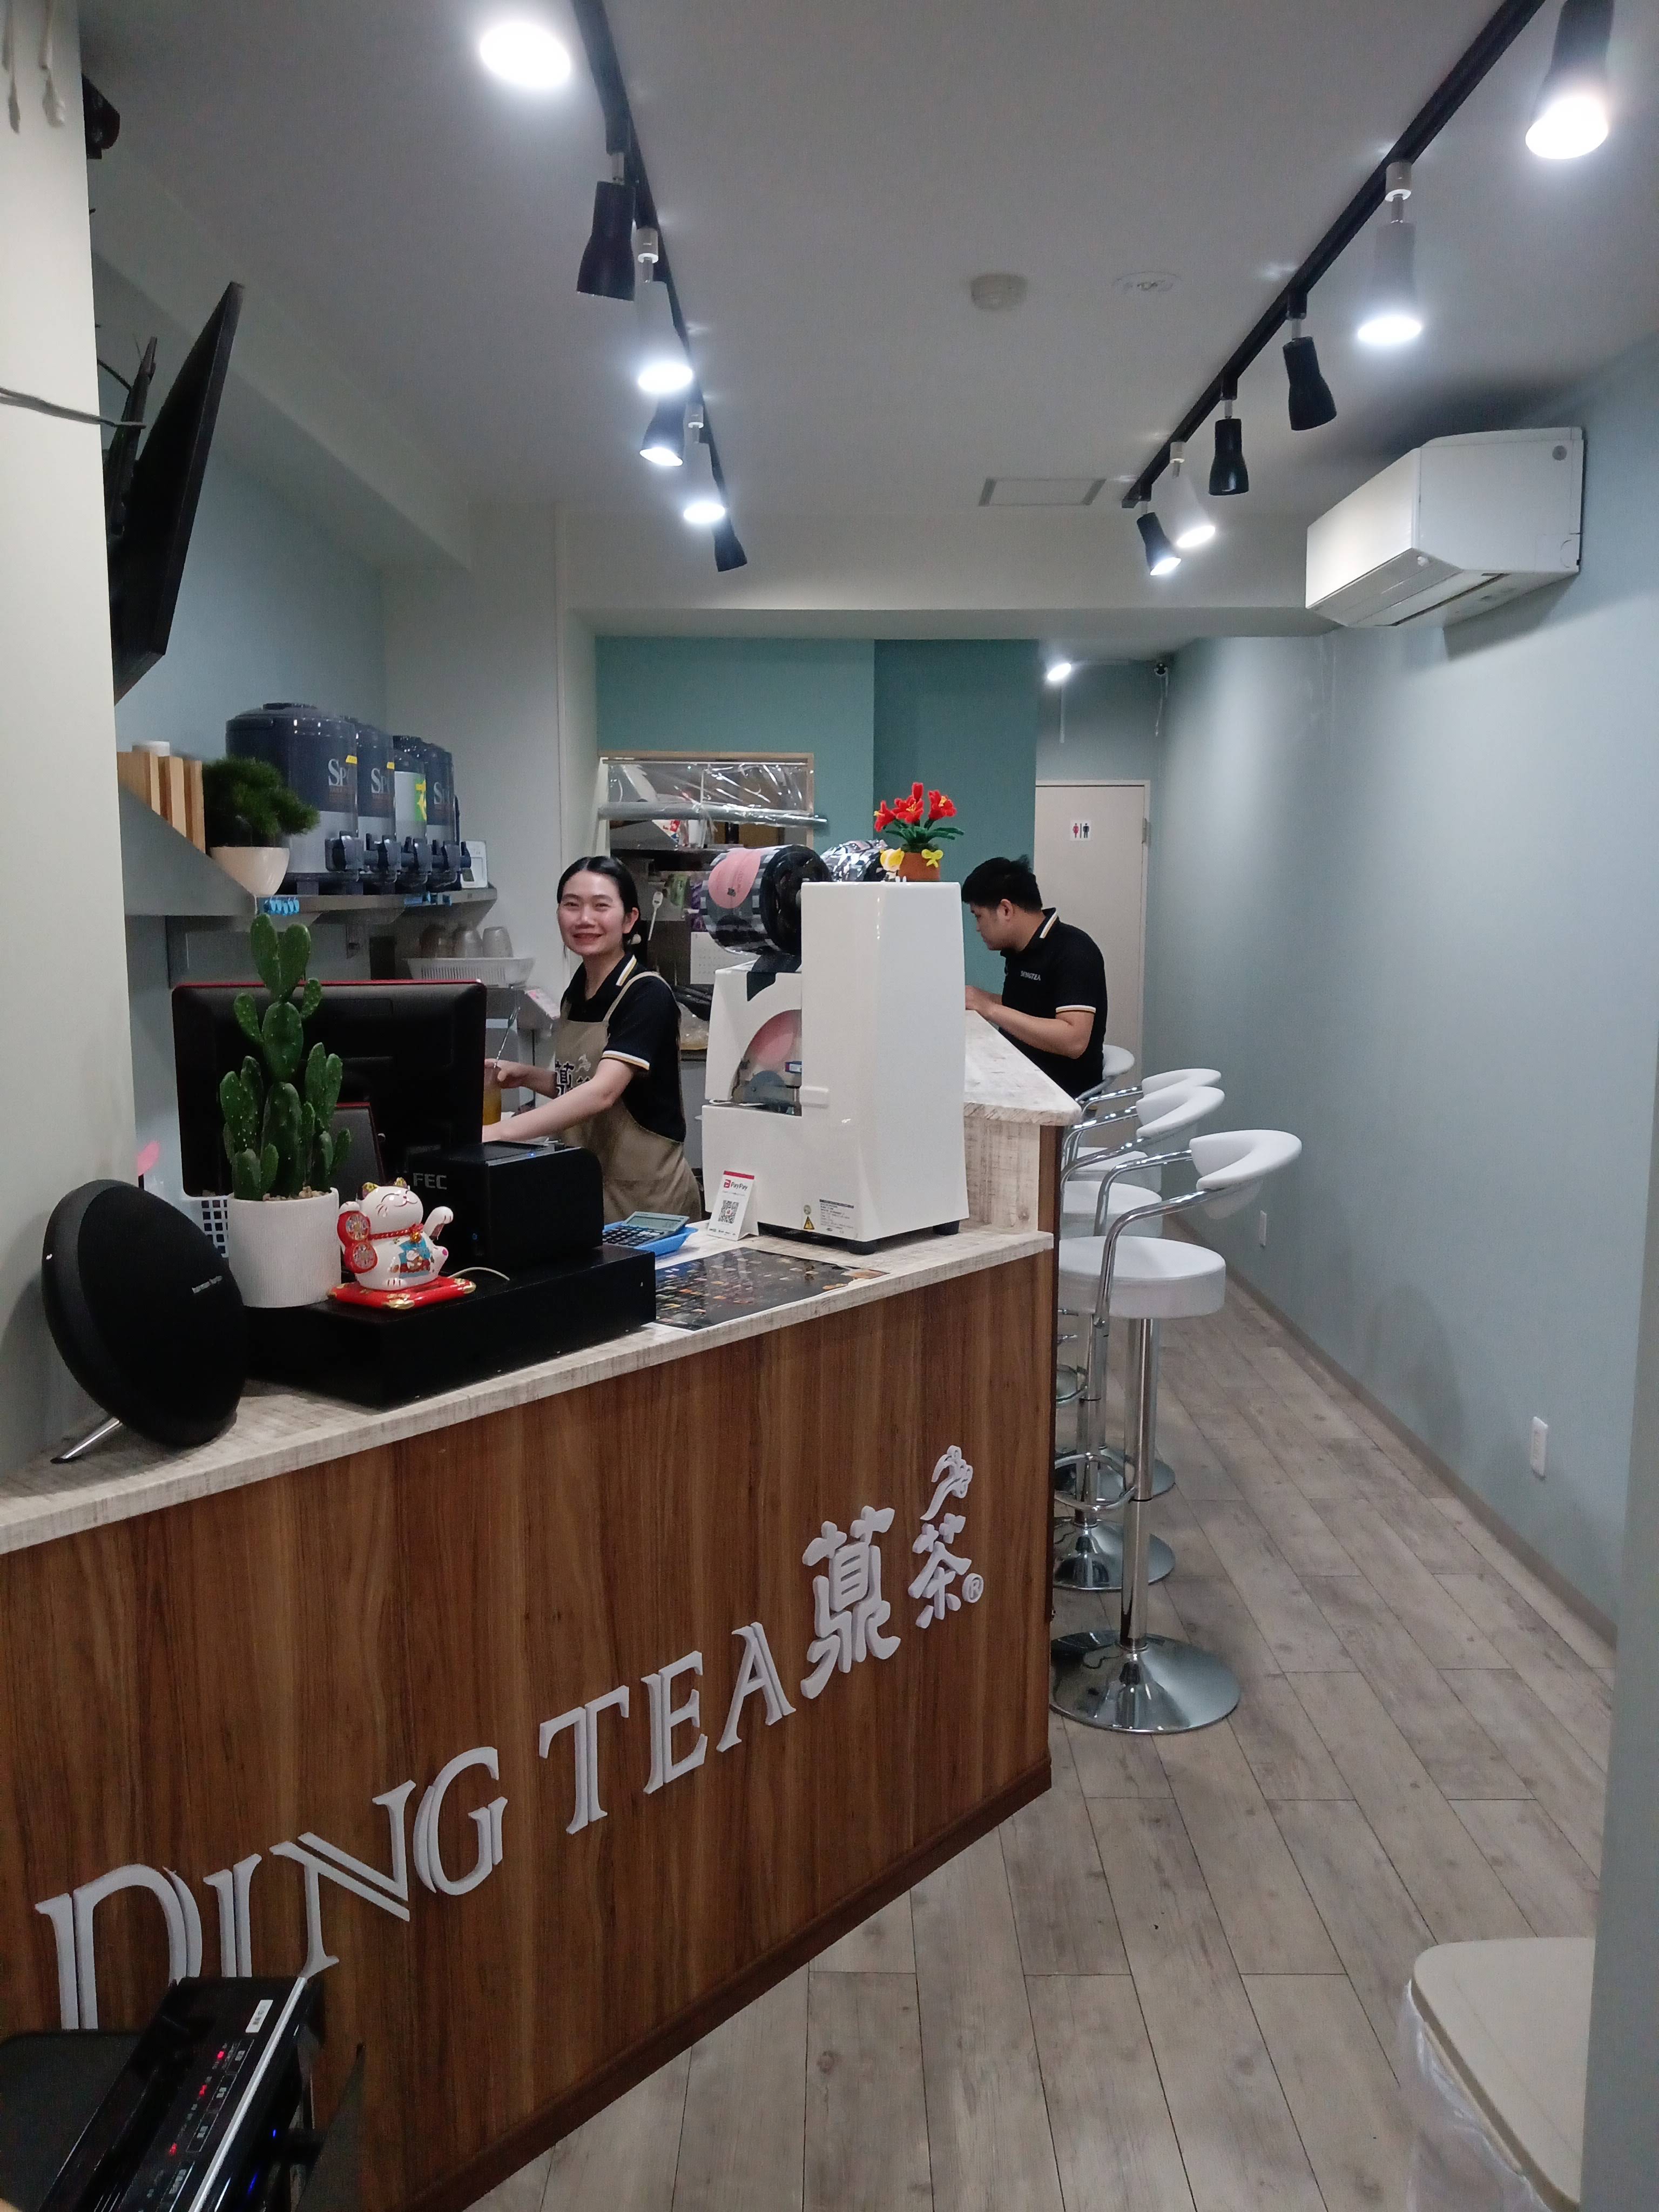  Tapioca specialty store DING TEA